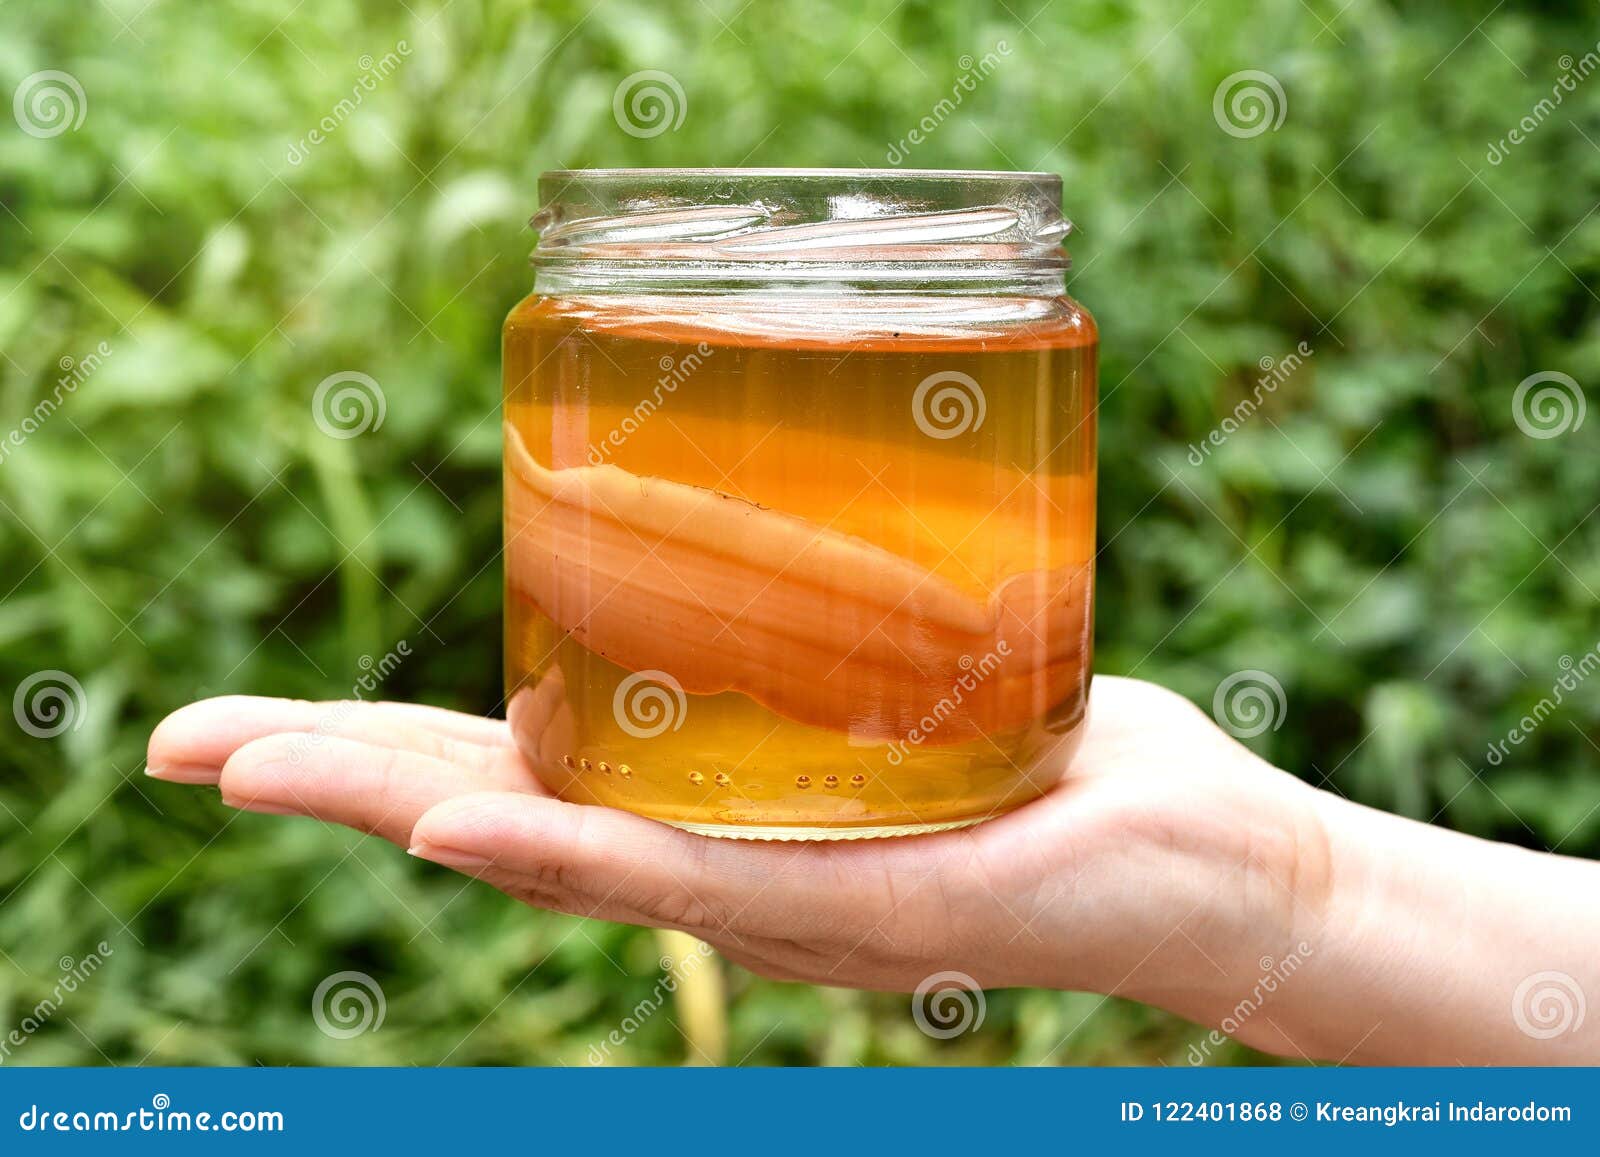 scoby, hand holding tea mushroom with kombucha tea, healthy fermented food, probiotic nutrition drink.